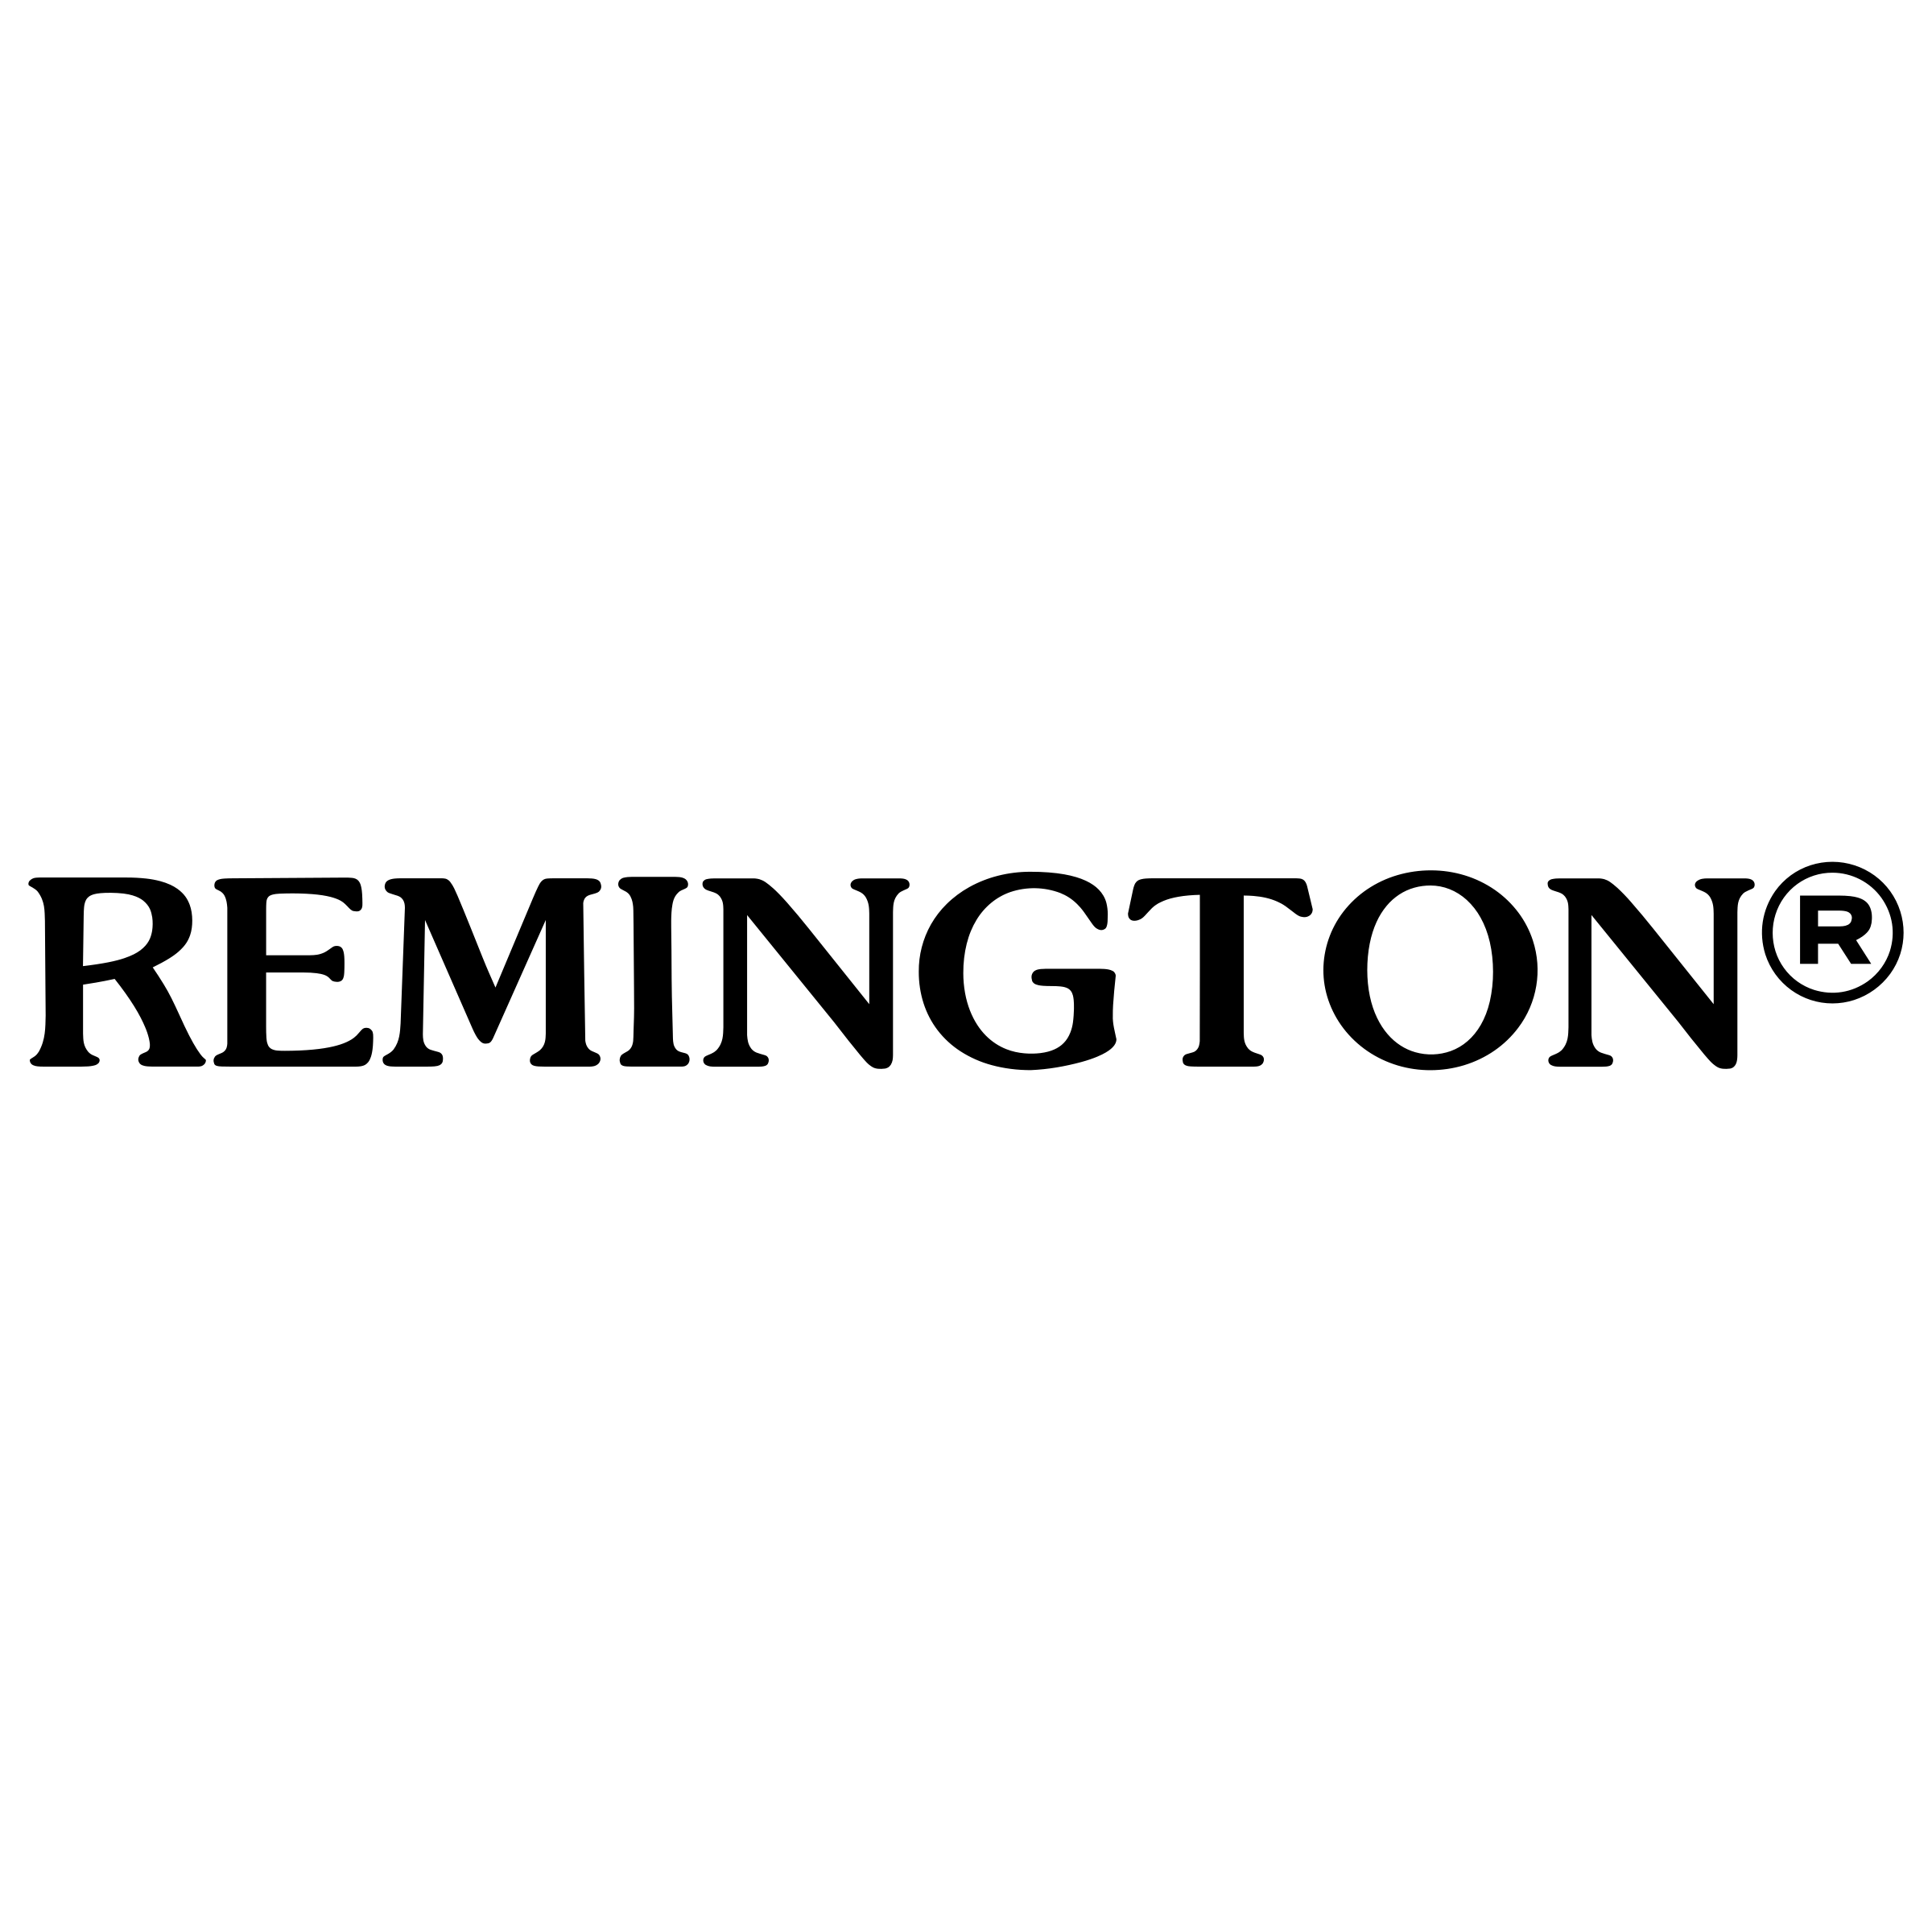 Remmington Logo - Remington Logo PNG Transparent & SVG Vector - Freebie Supply